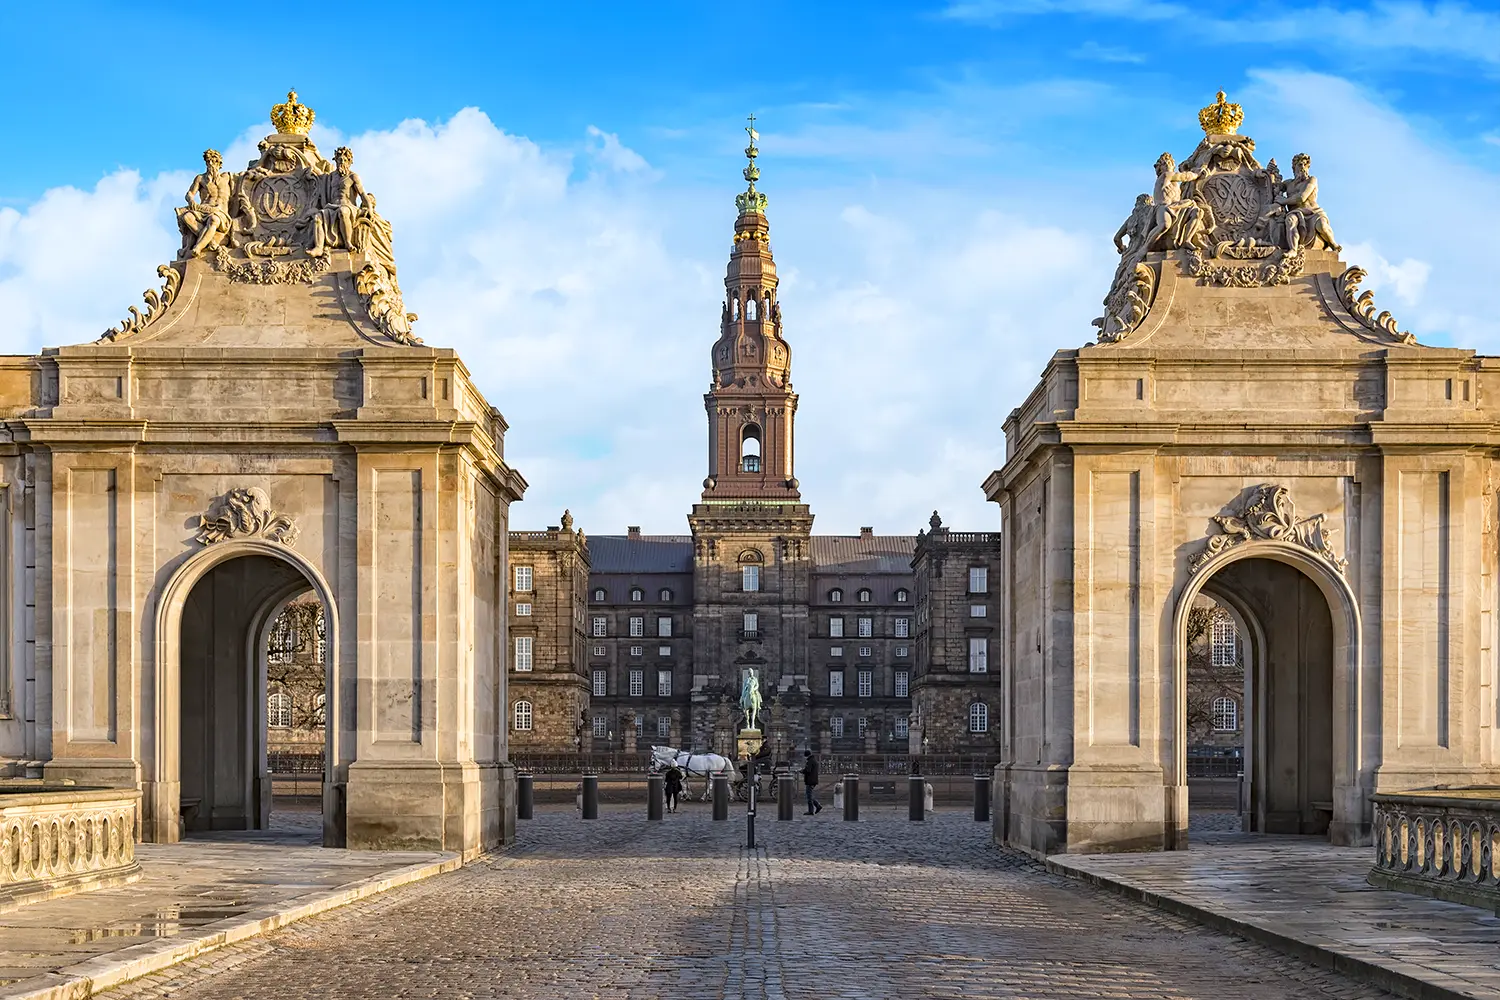 Christianborg palace in Copenhagen, Denmark